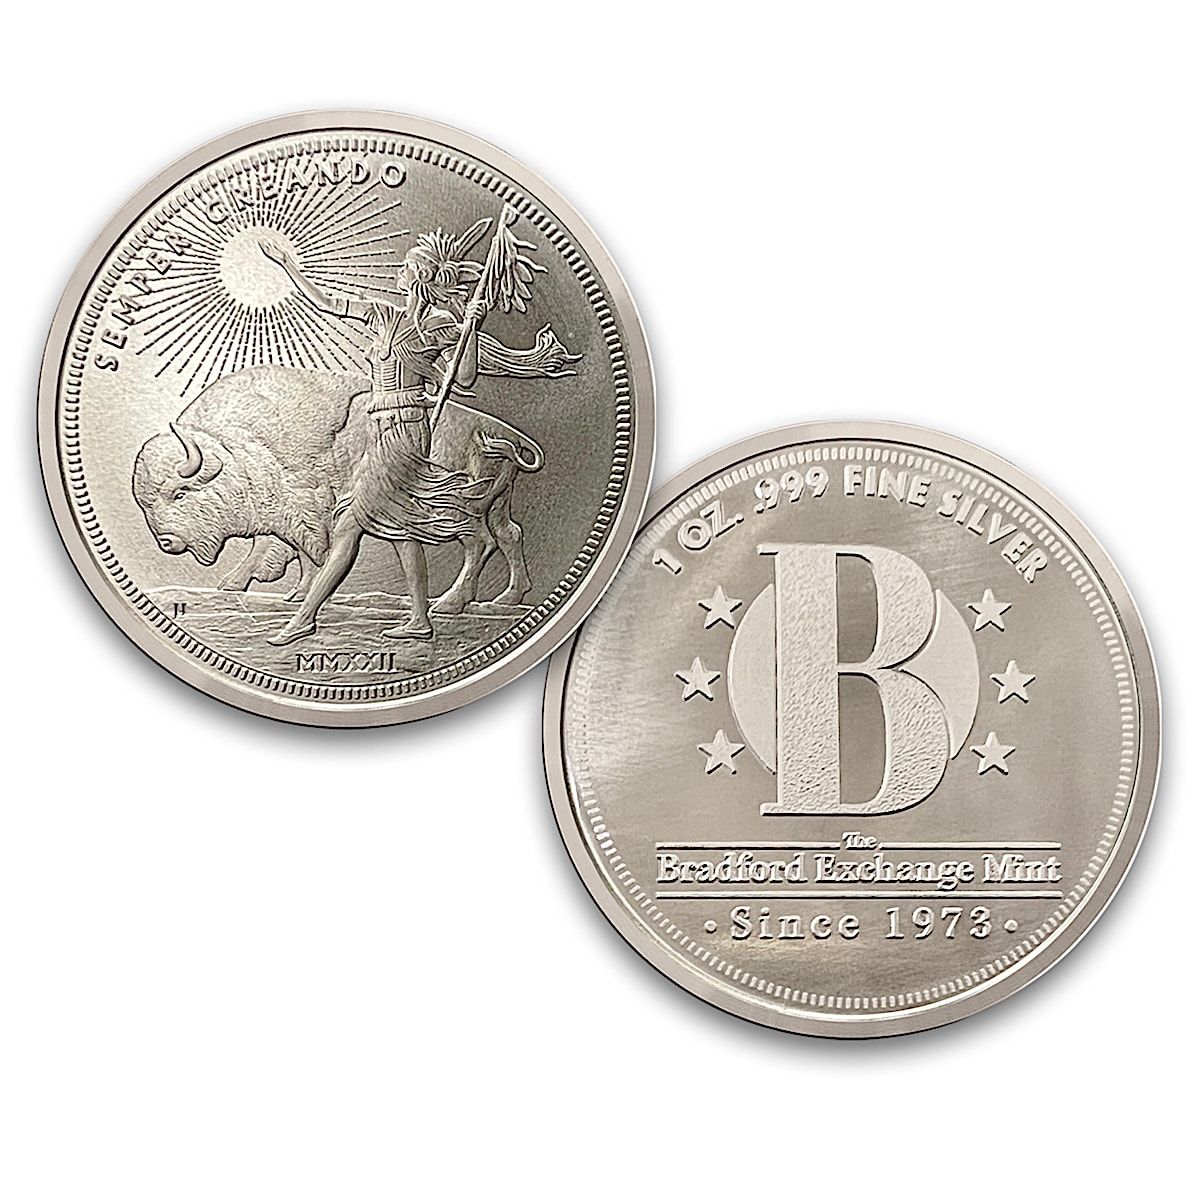 Bradford Bullion Coin In One Troy Oz. Of .999 Silver